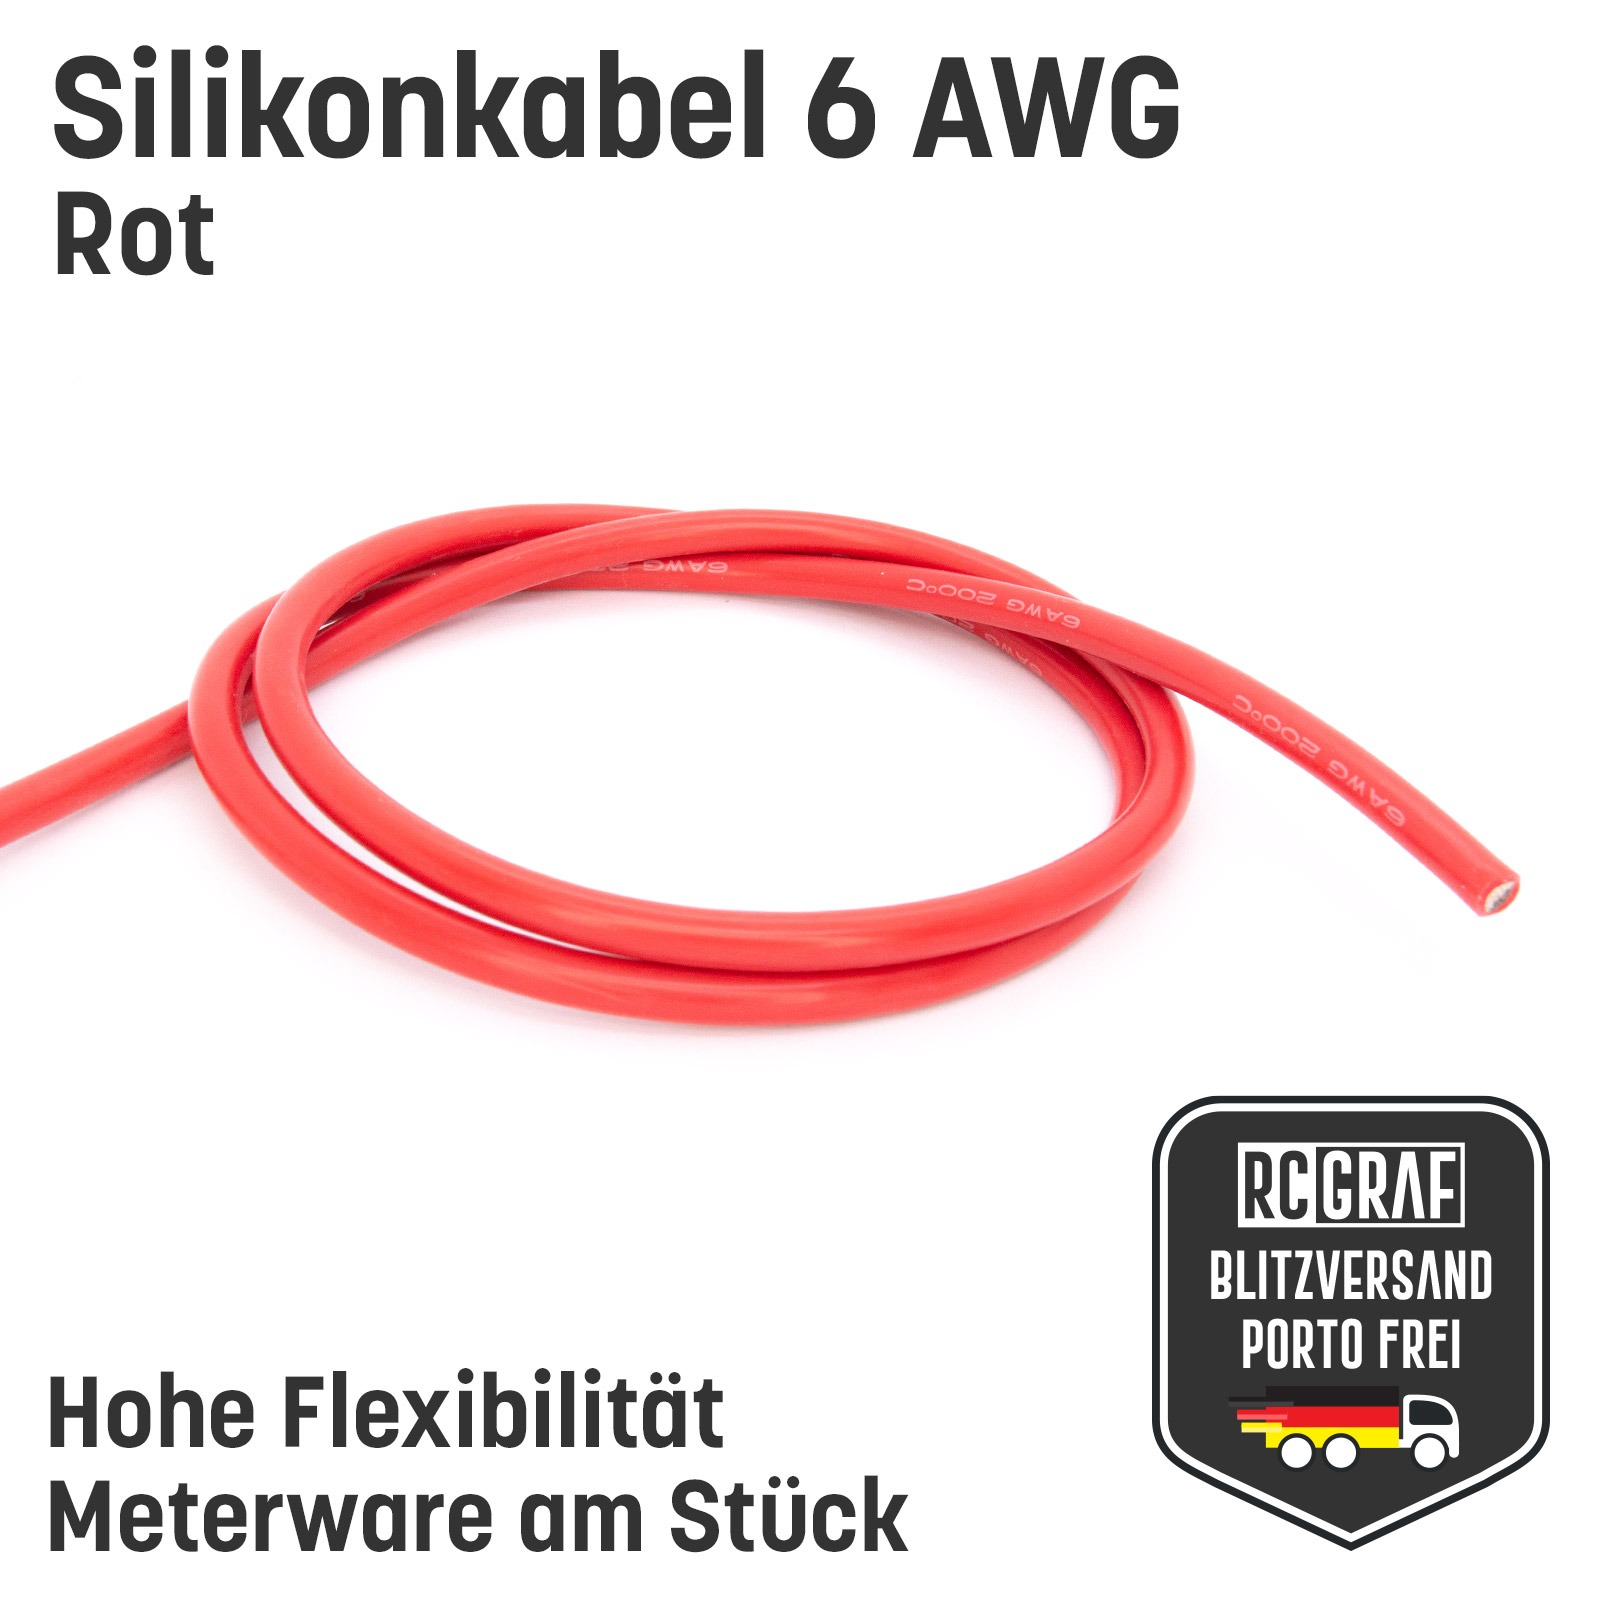 Silikonkabel 6 AWG hochflexibel Rot Schwarz Kupfer RC Kabel 3